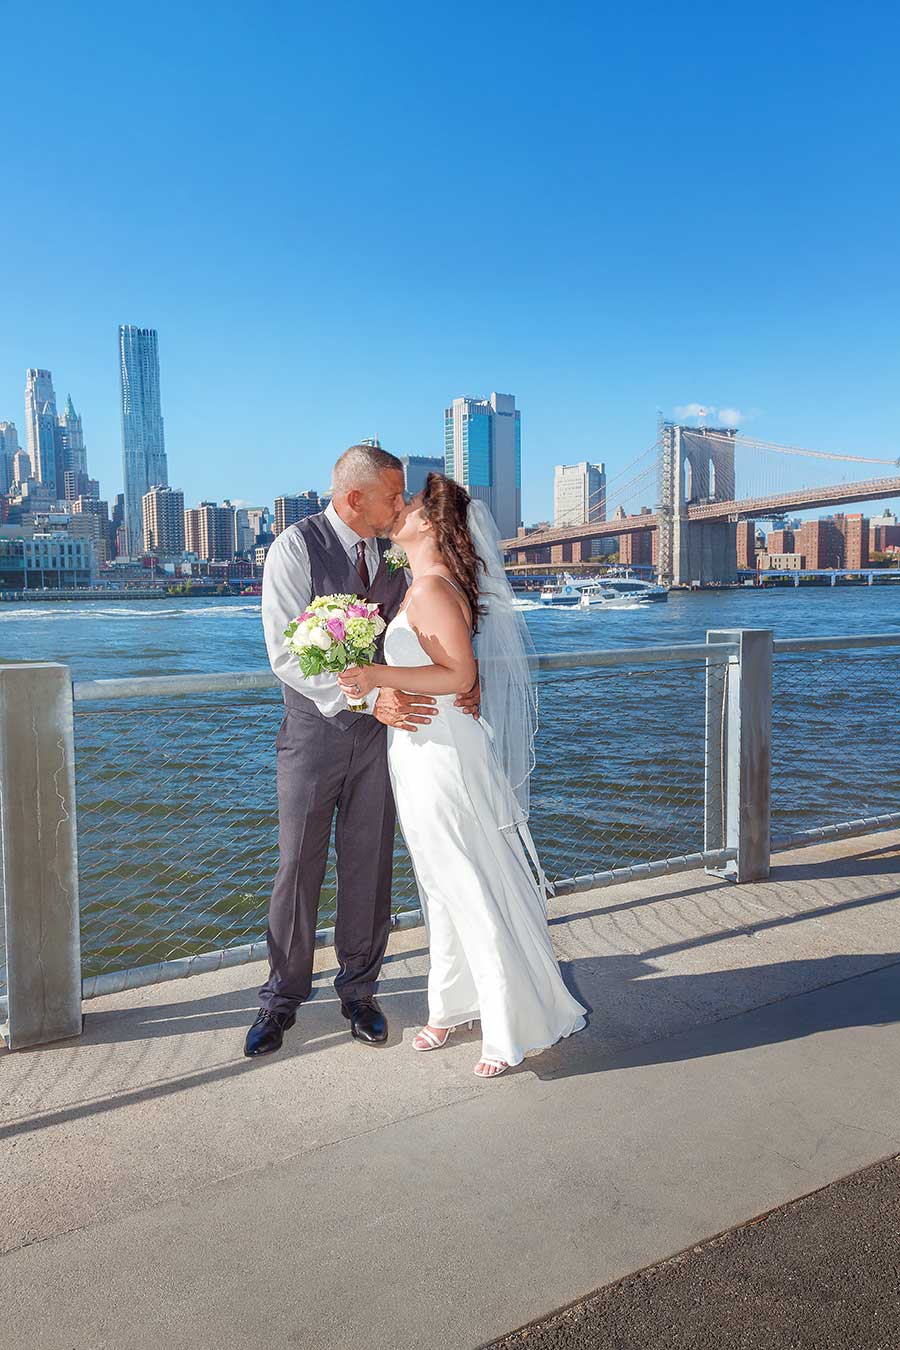 Photo Studio 308 Wedding Photography Brooklyn Bridge Promenade